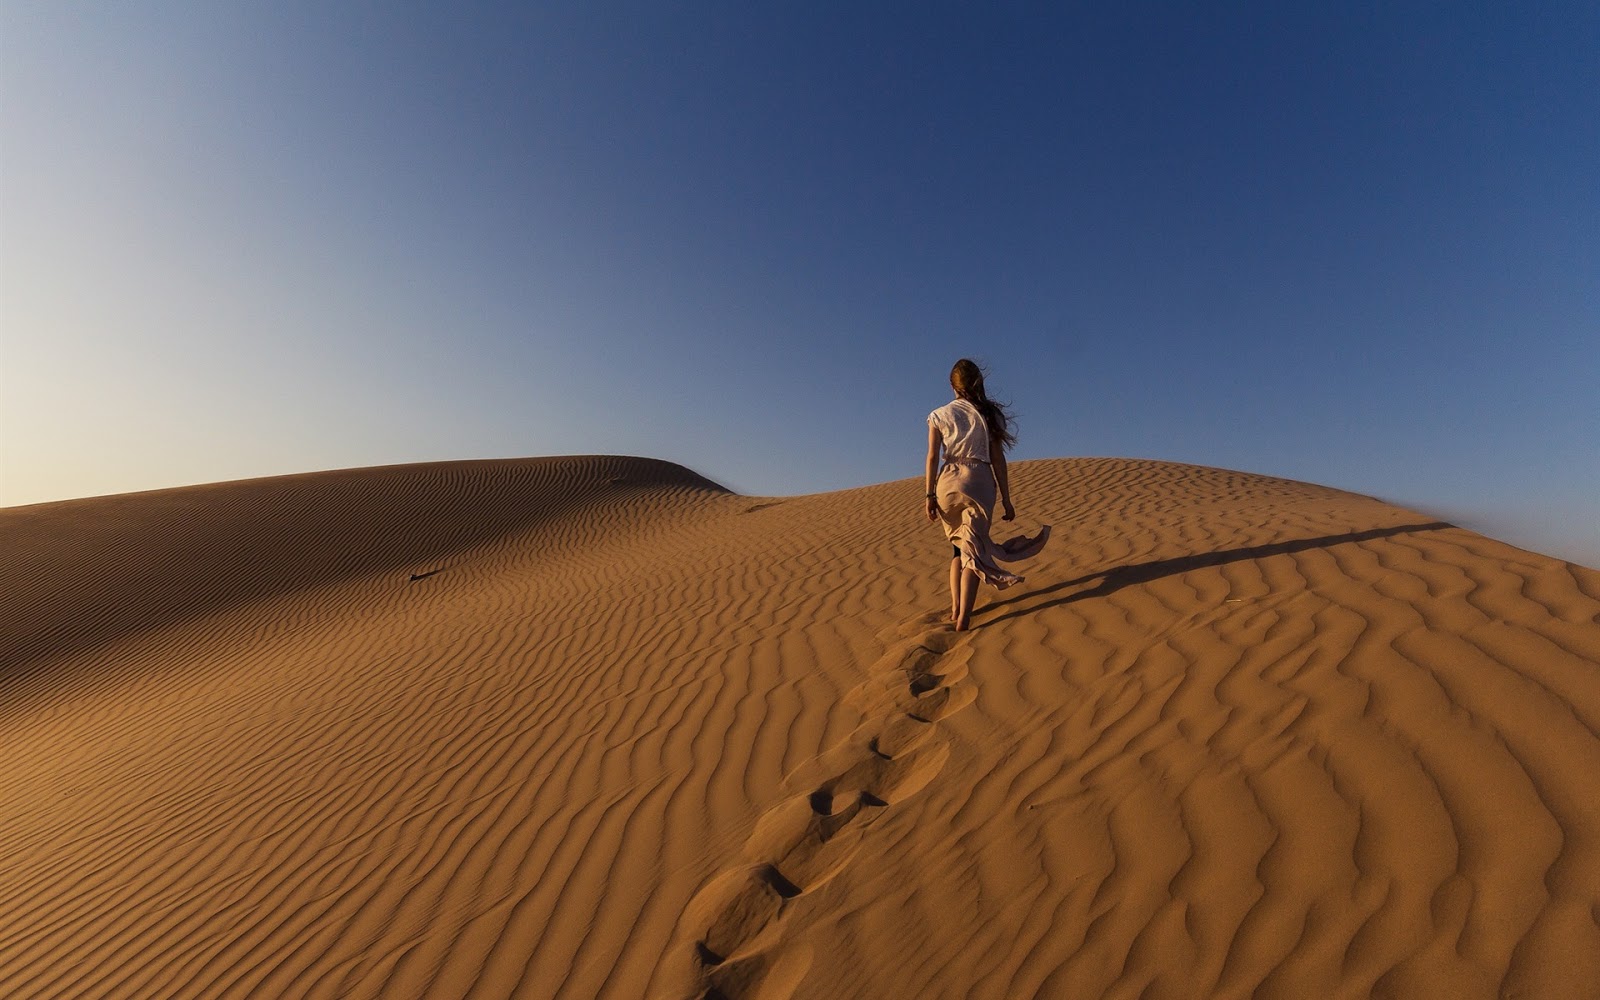 Chelsie Aryn снимается абсолютно голая в безлюдной пустыне